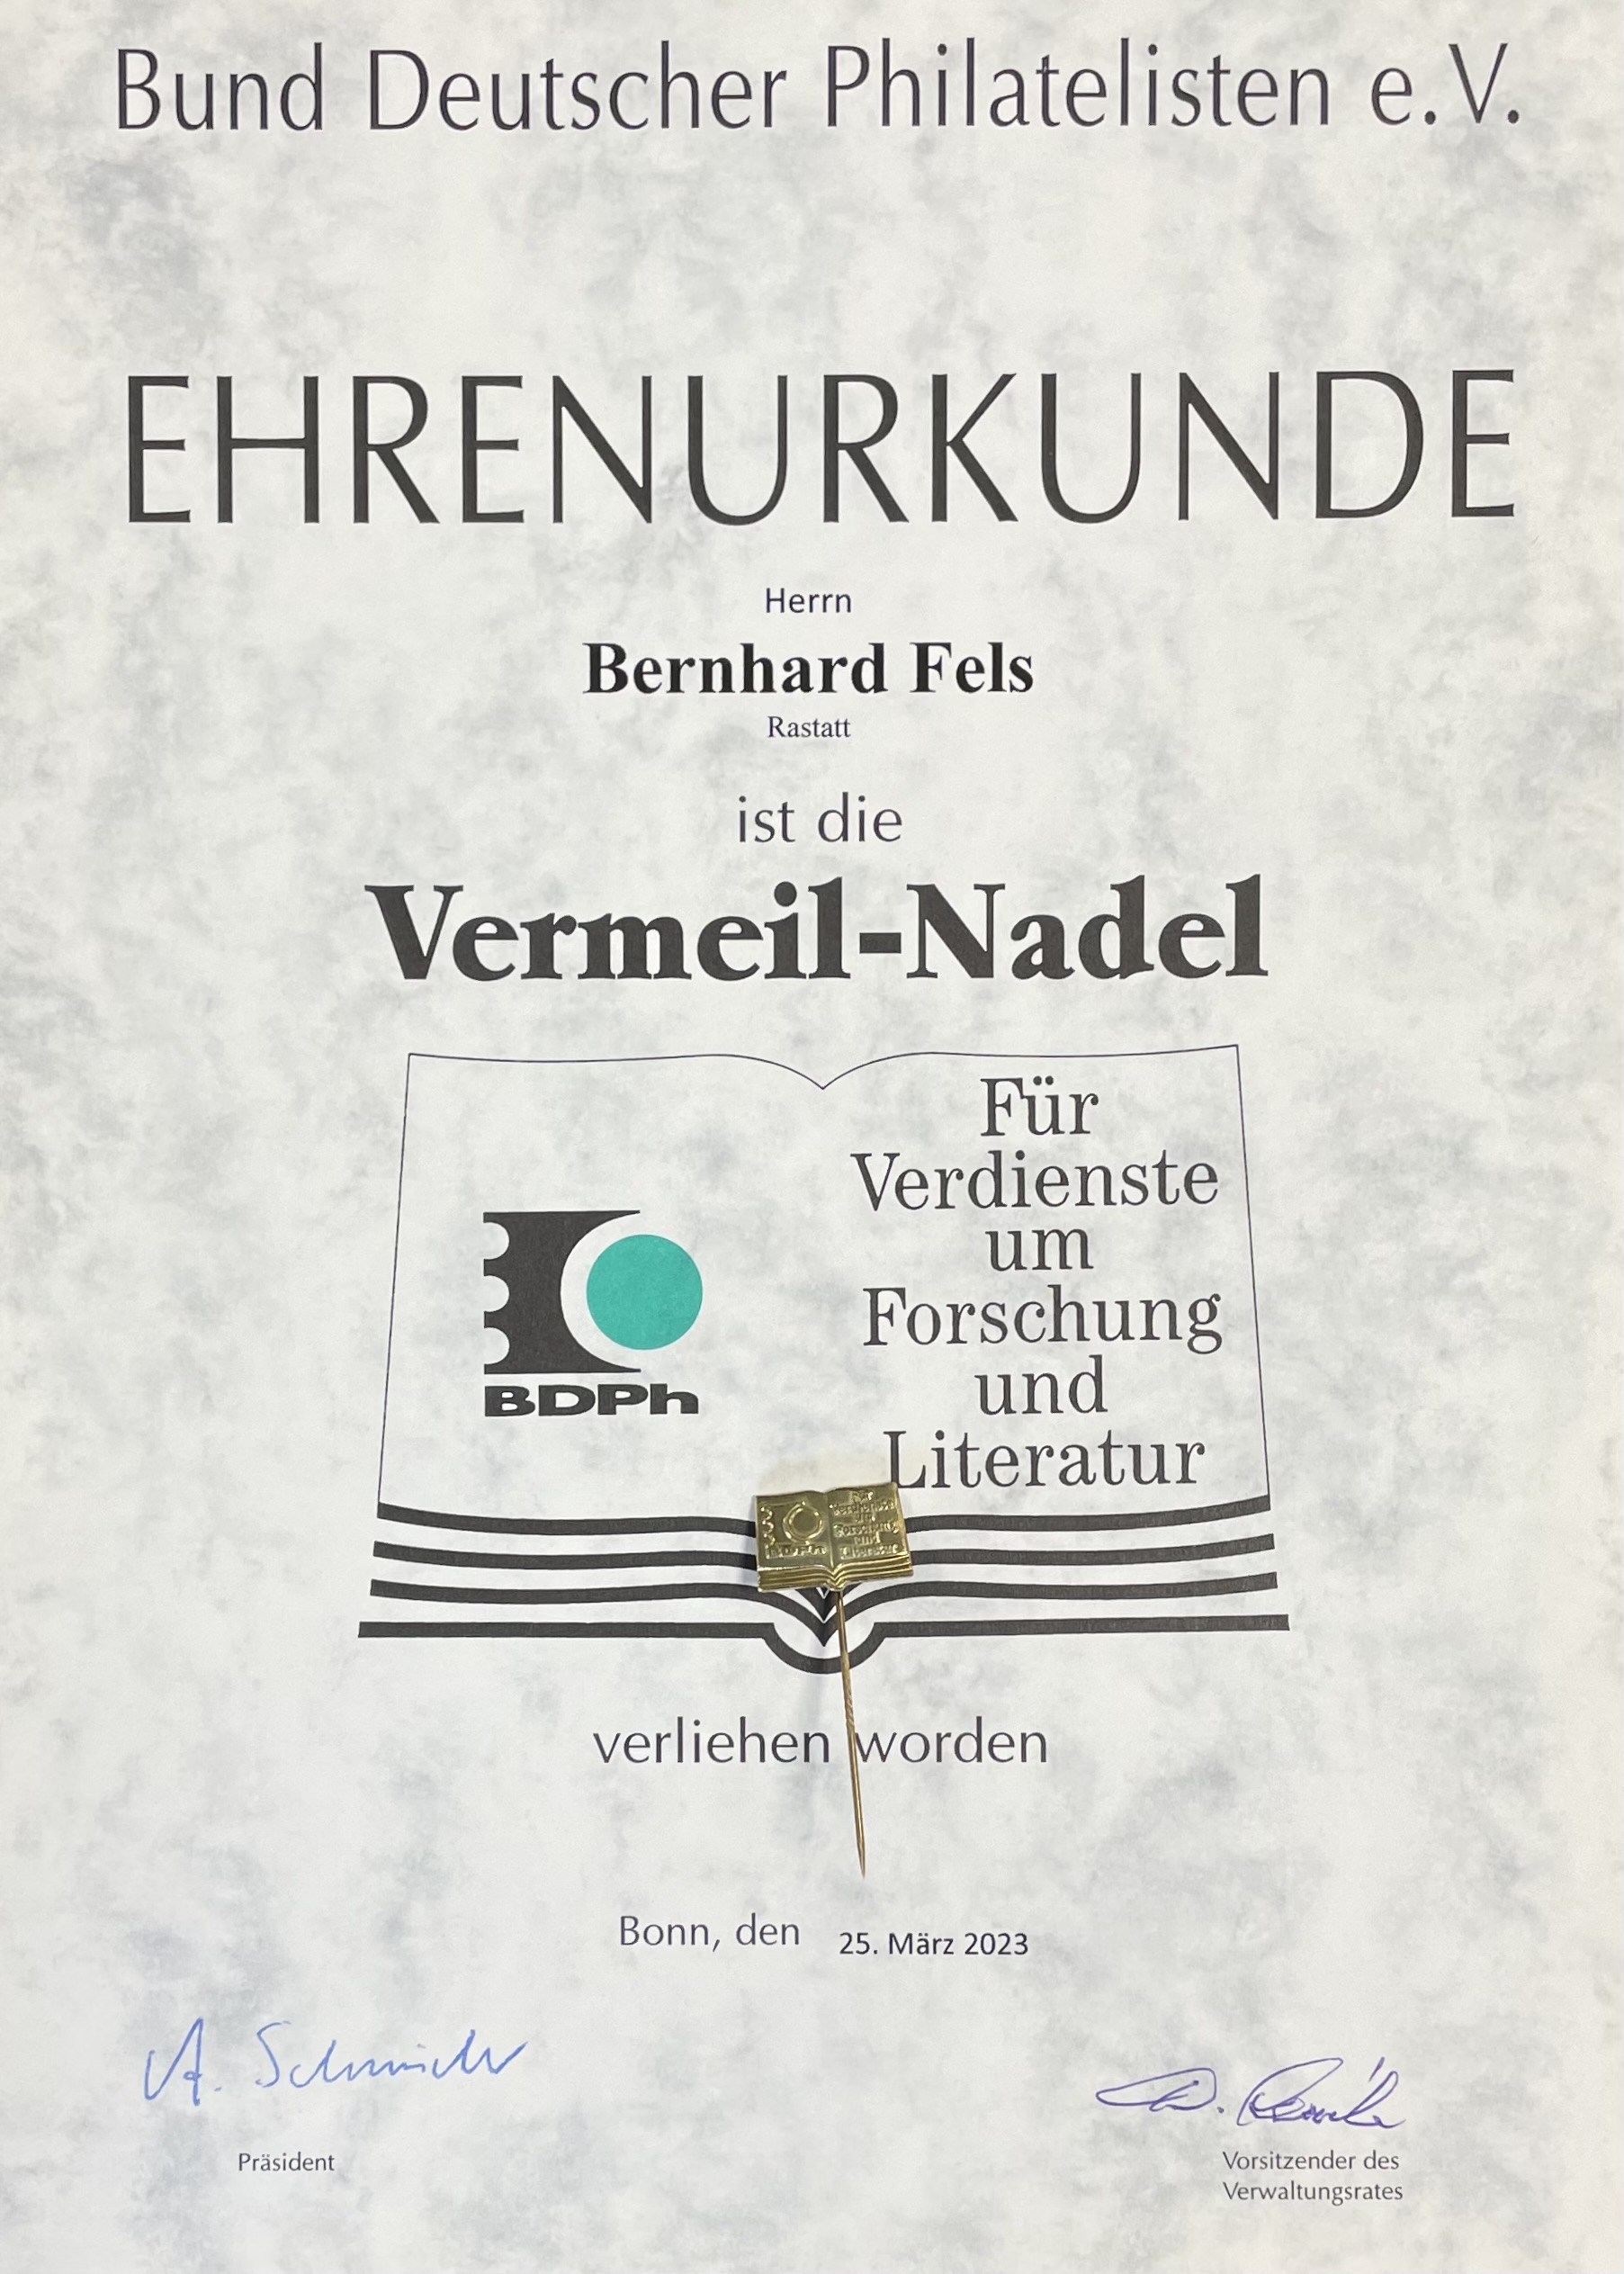 Certificate for Bernhard Fels